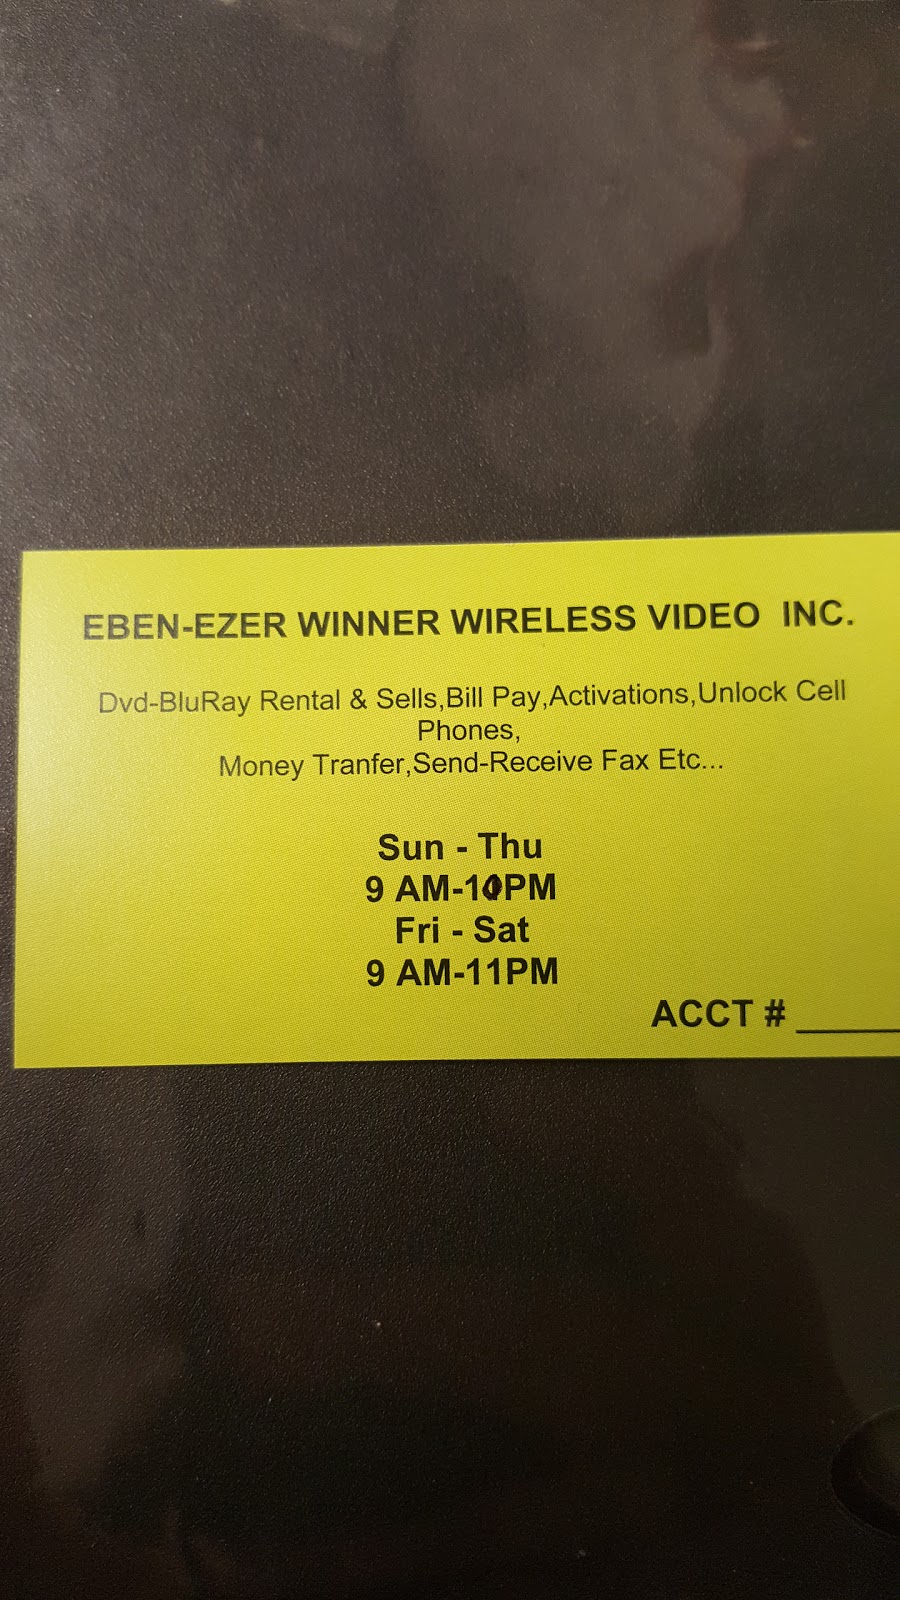 Photo of MoneyGram (inside Eben-Ezer Winner Wireless Video Inc) in Kings County City, New York, United States - 2 Picture of Point of interest, Establishment, Finance